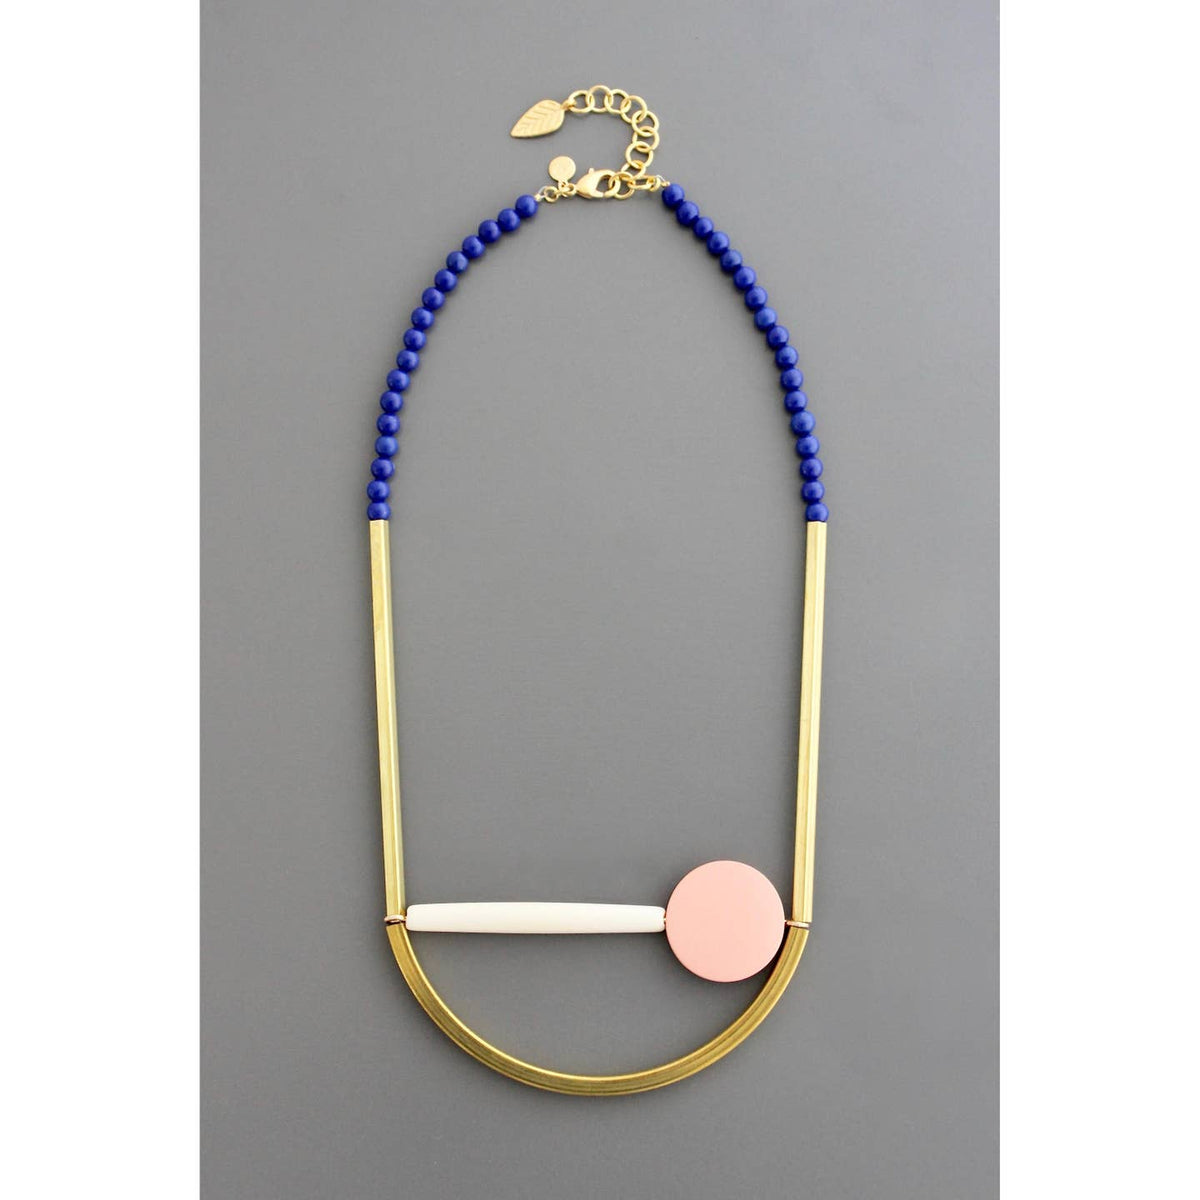 David Aubrey Geometric Blue and Pink Necklace